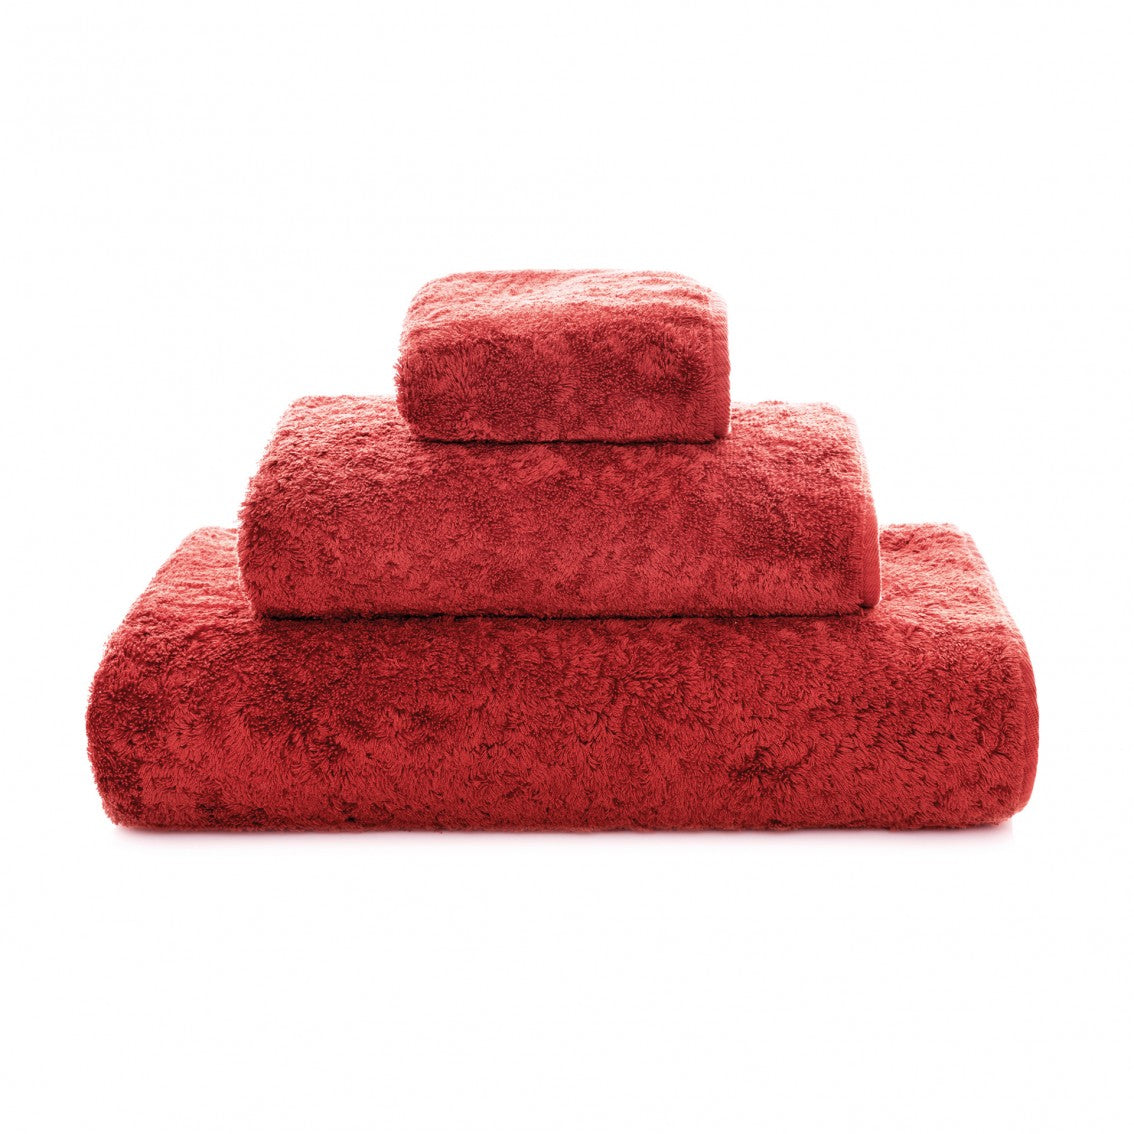 Graccioza Egoist Cherry Bath Towels - Luxurious Beds and Linens